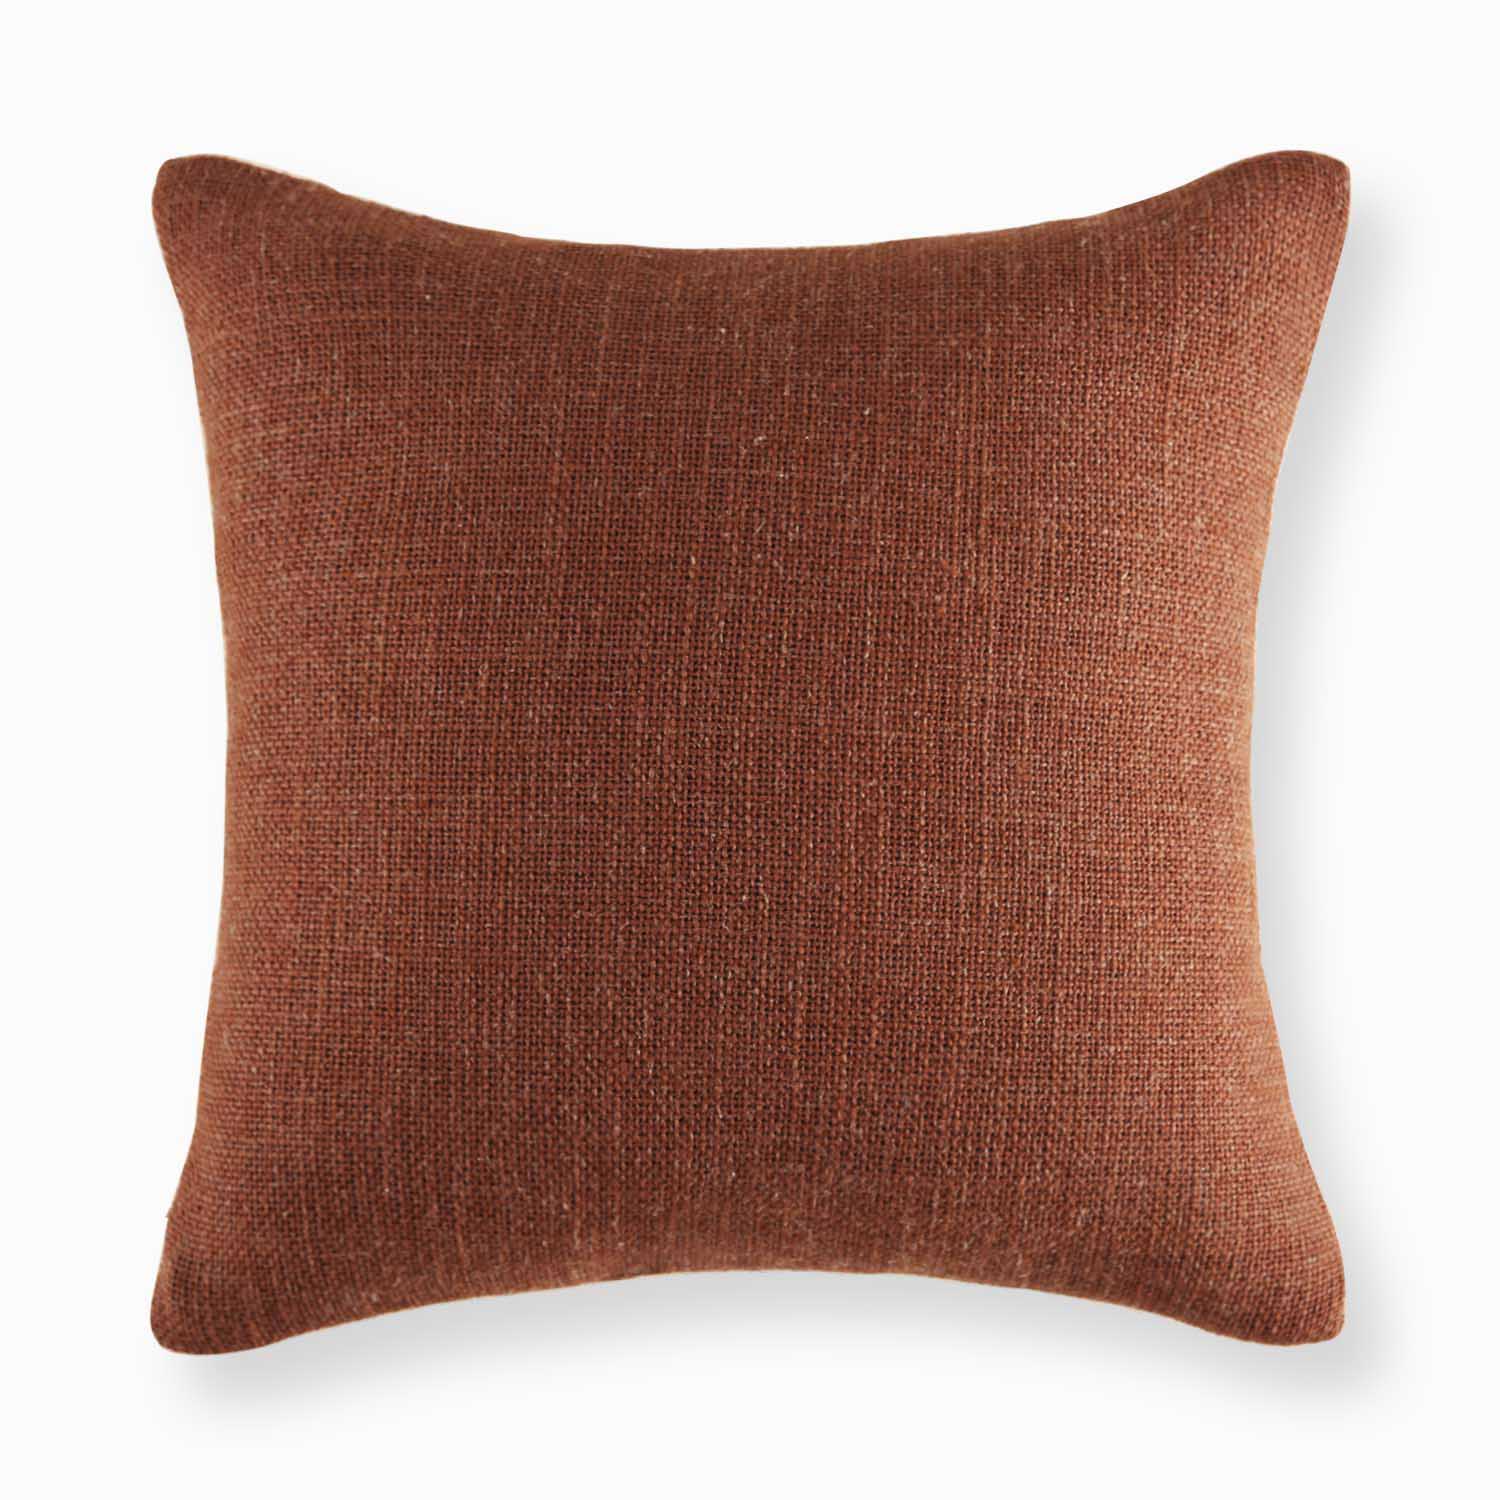 Savona Textured Linen Pillow Cover-Tan 18x18 Decorative Linen pillow cover